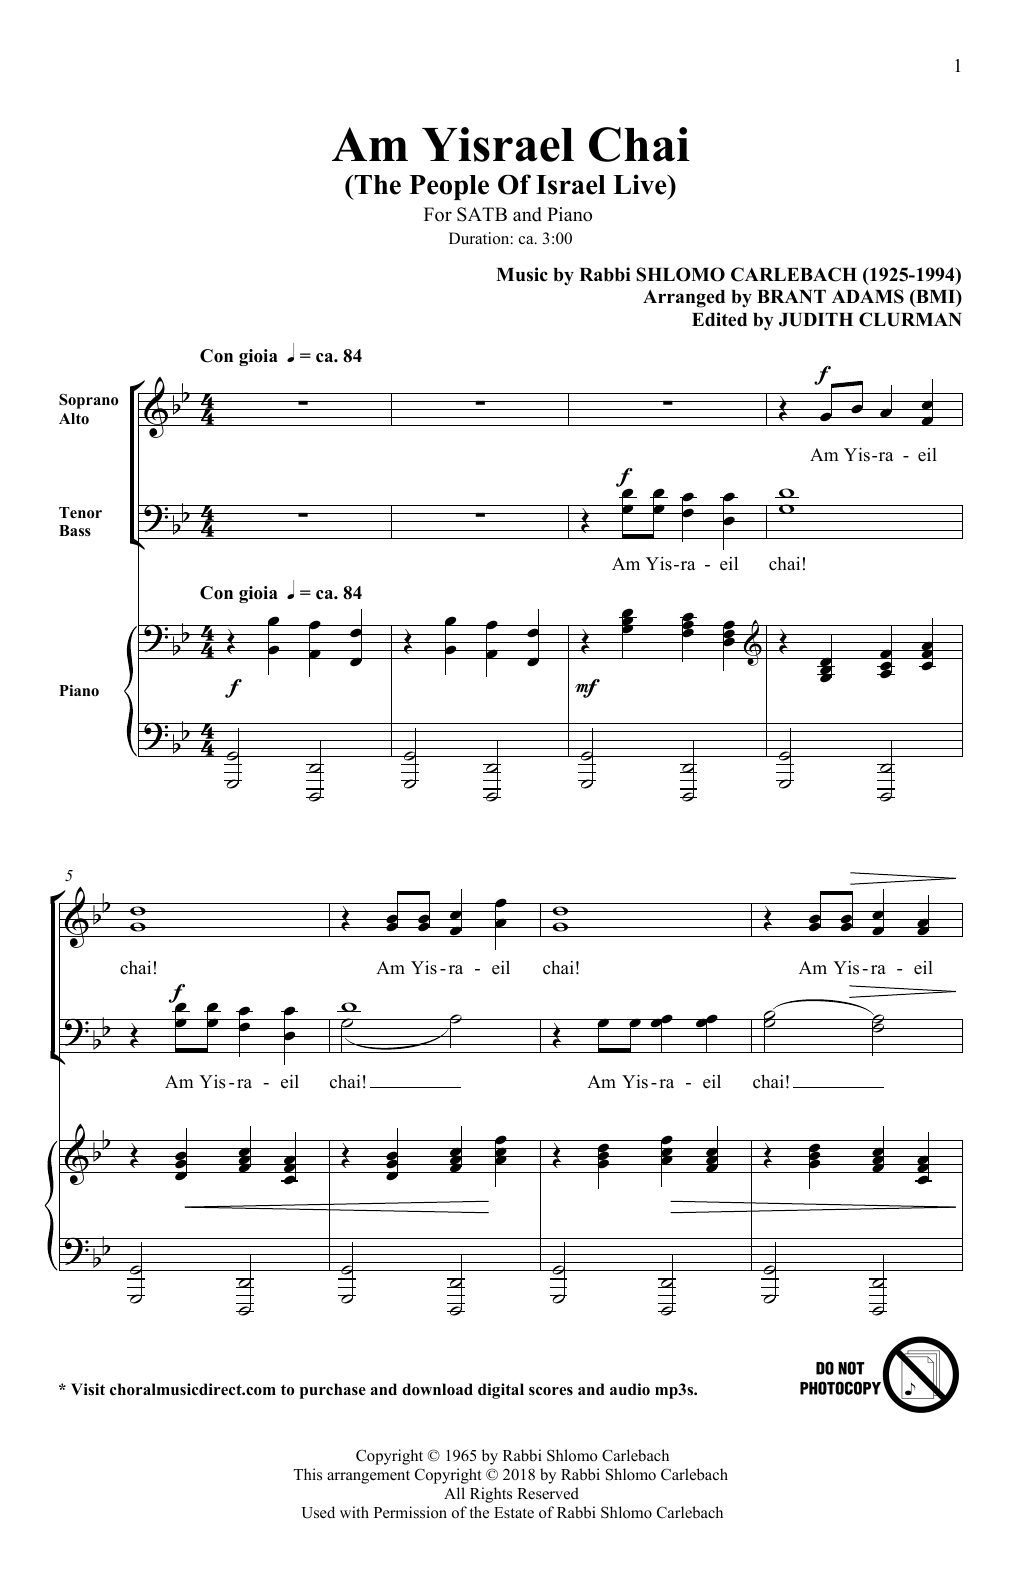 Rabbi Shlomo Carlebach Am Yisrael Chai (arr. Brant Adams) Sheet Music Notes & Chords for SATB Choir - Download or Print PDF